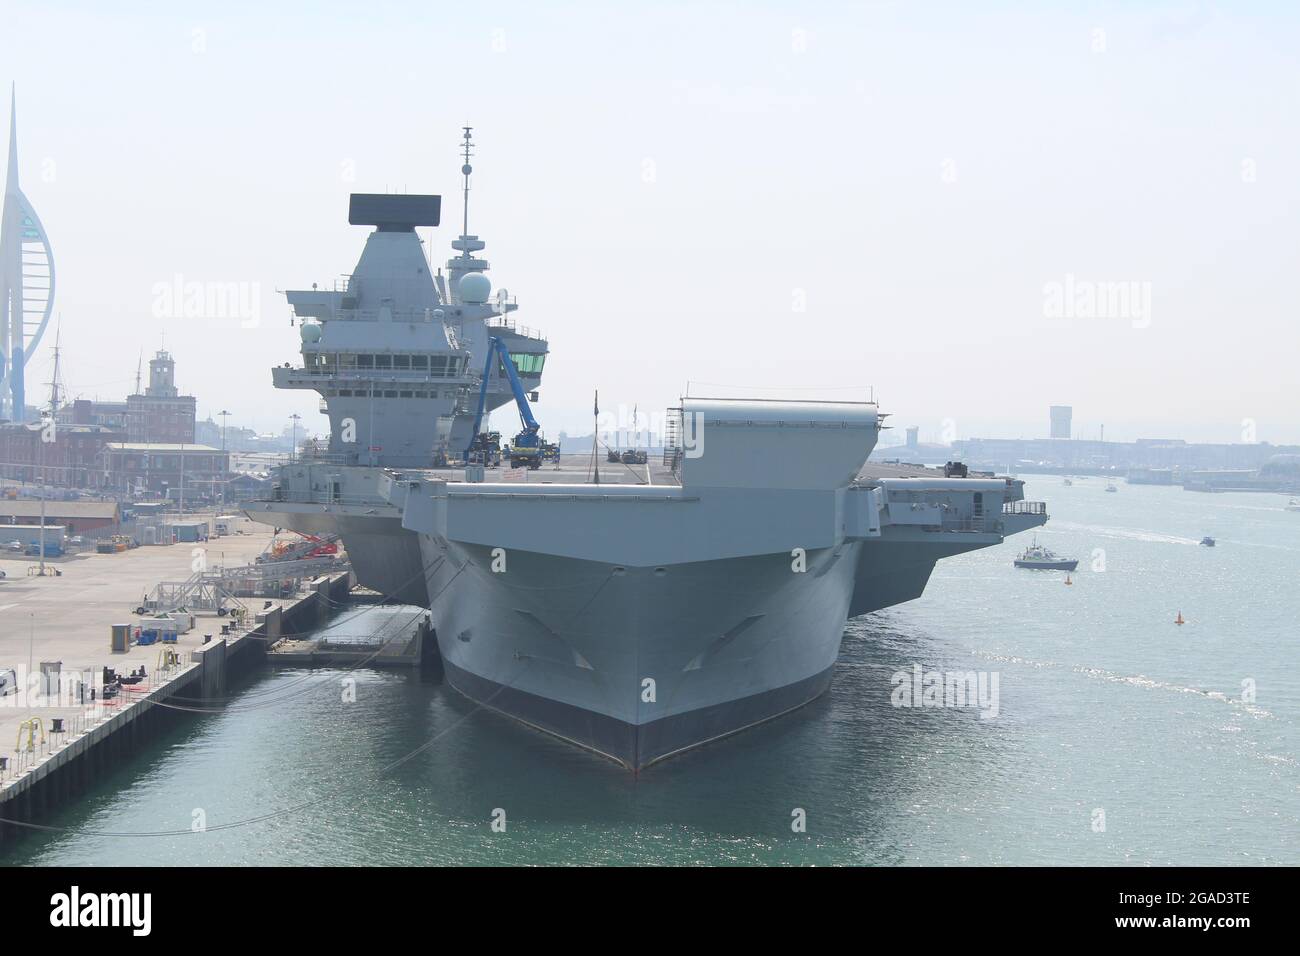 HMS Ark Royal docked in UK England Stock Photo